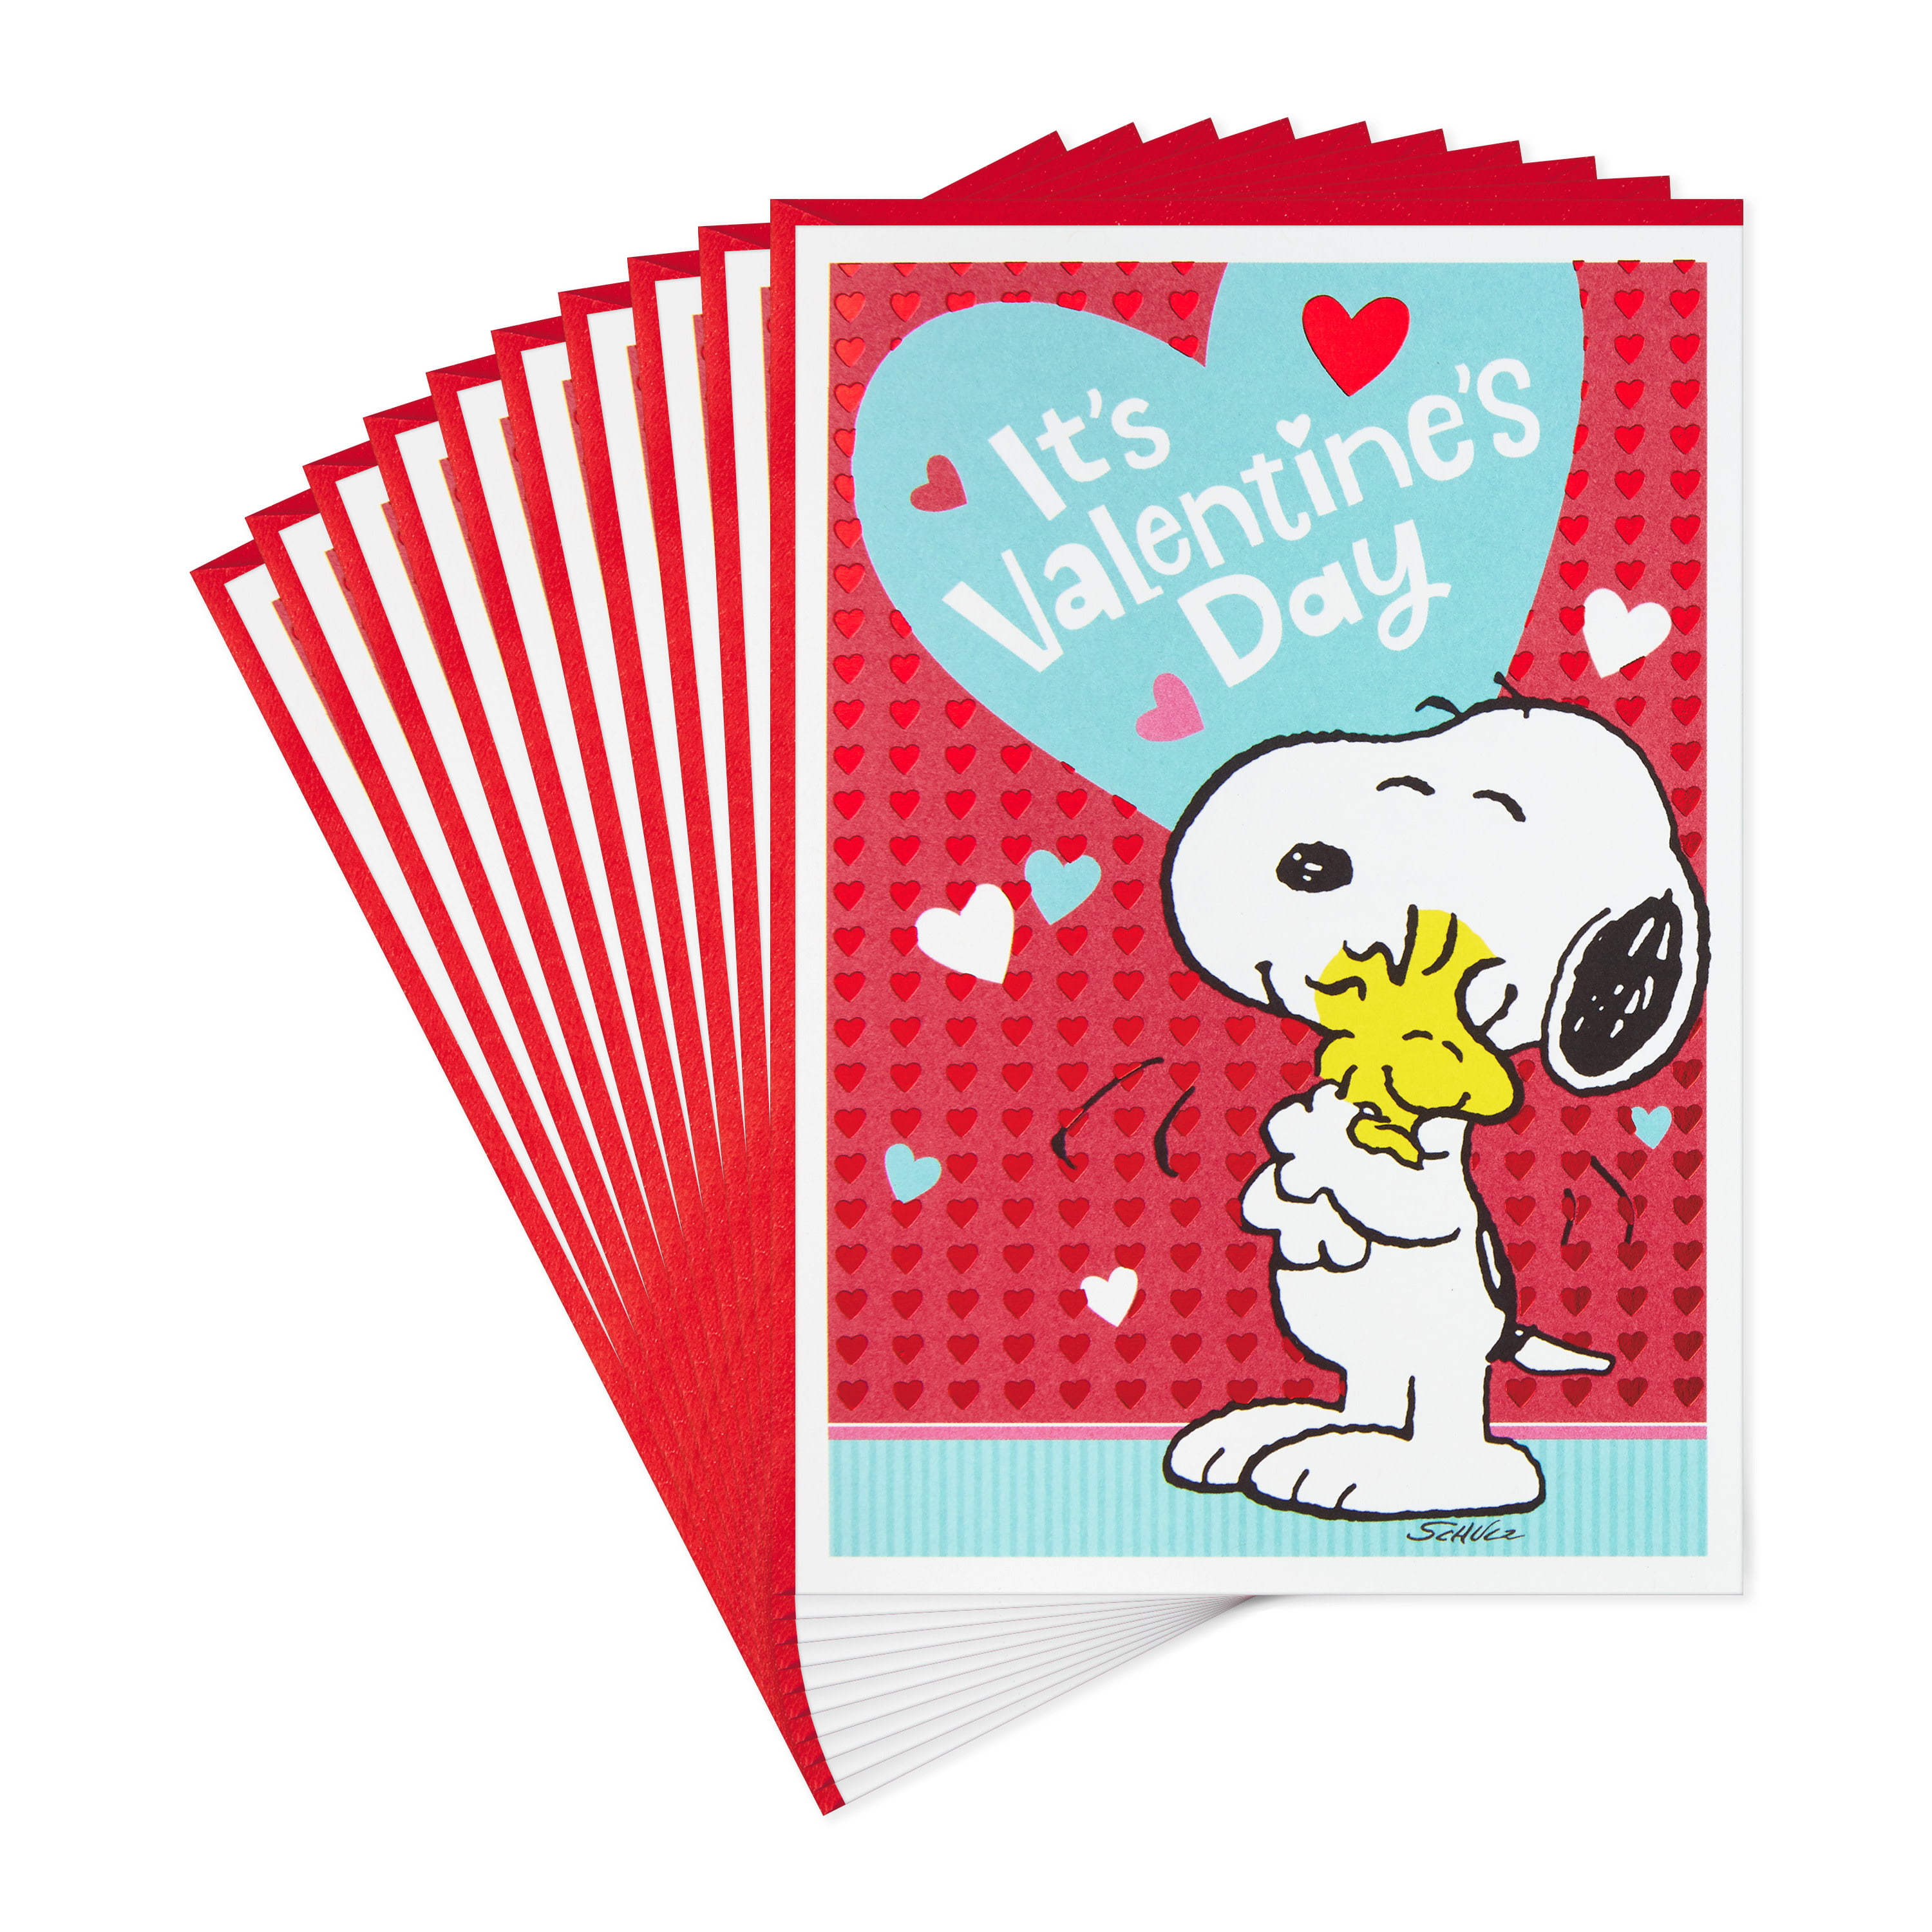 New For Friend Hallmark Valentine's Day Card with envelope